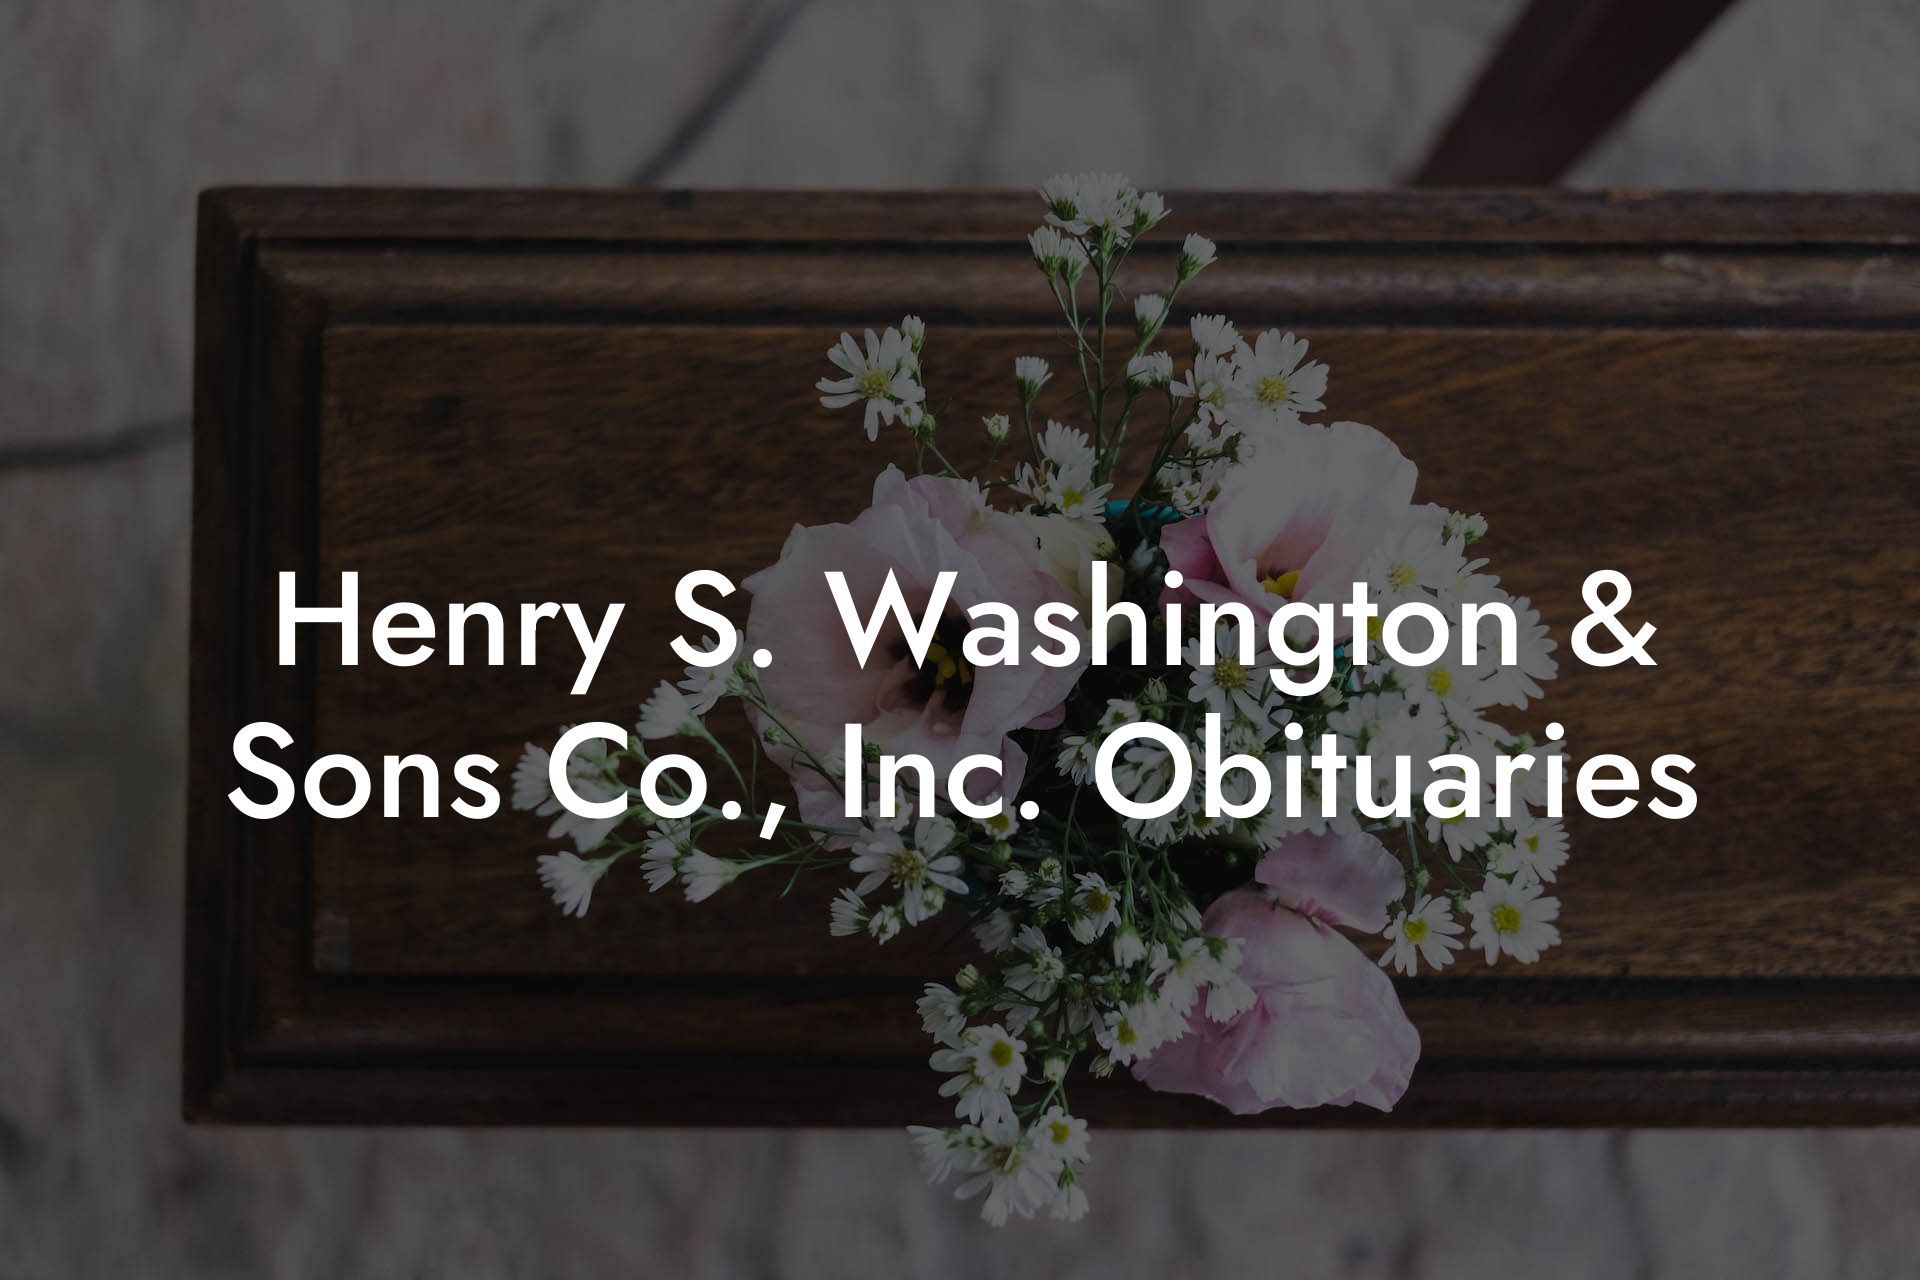 Henry S. Washington & Sons Co., Inc. Obituaries